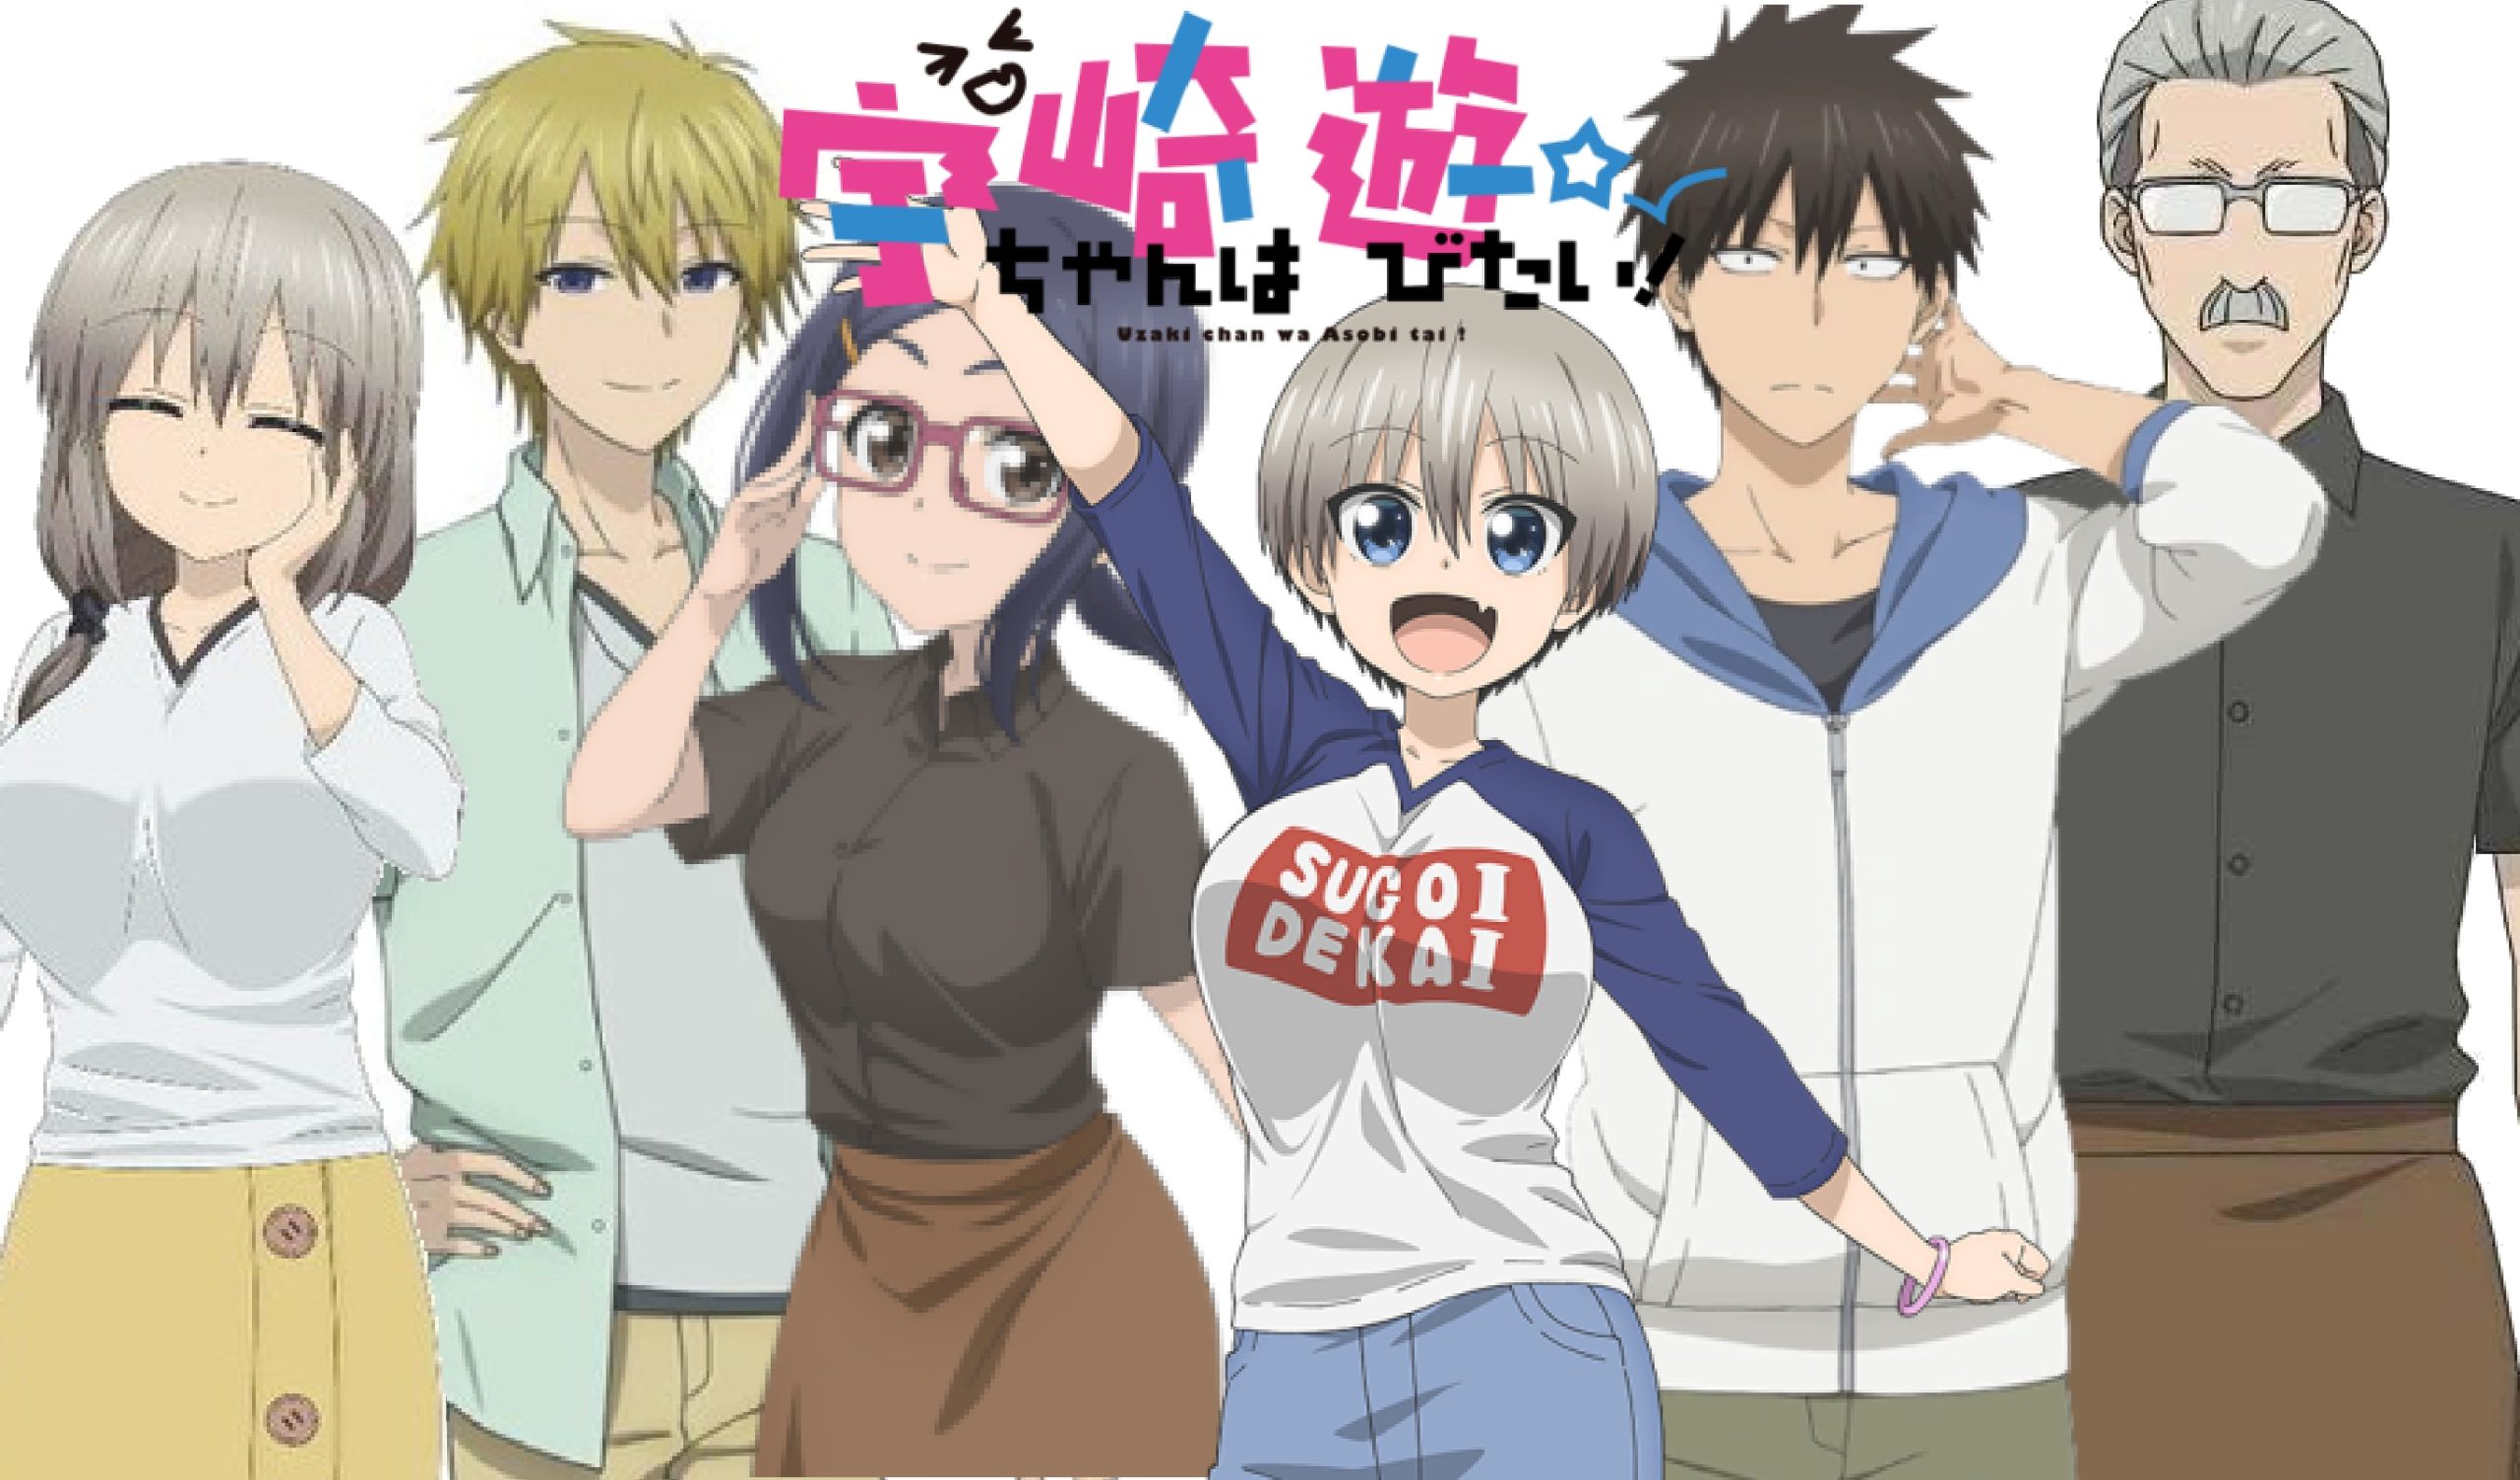 Crunchyroll.pt - Fofocar em família é mais edificante 🤭 (✨ Anime: Uzaki- chan Wants to Hang Out!)